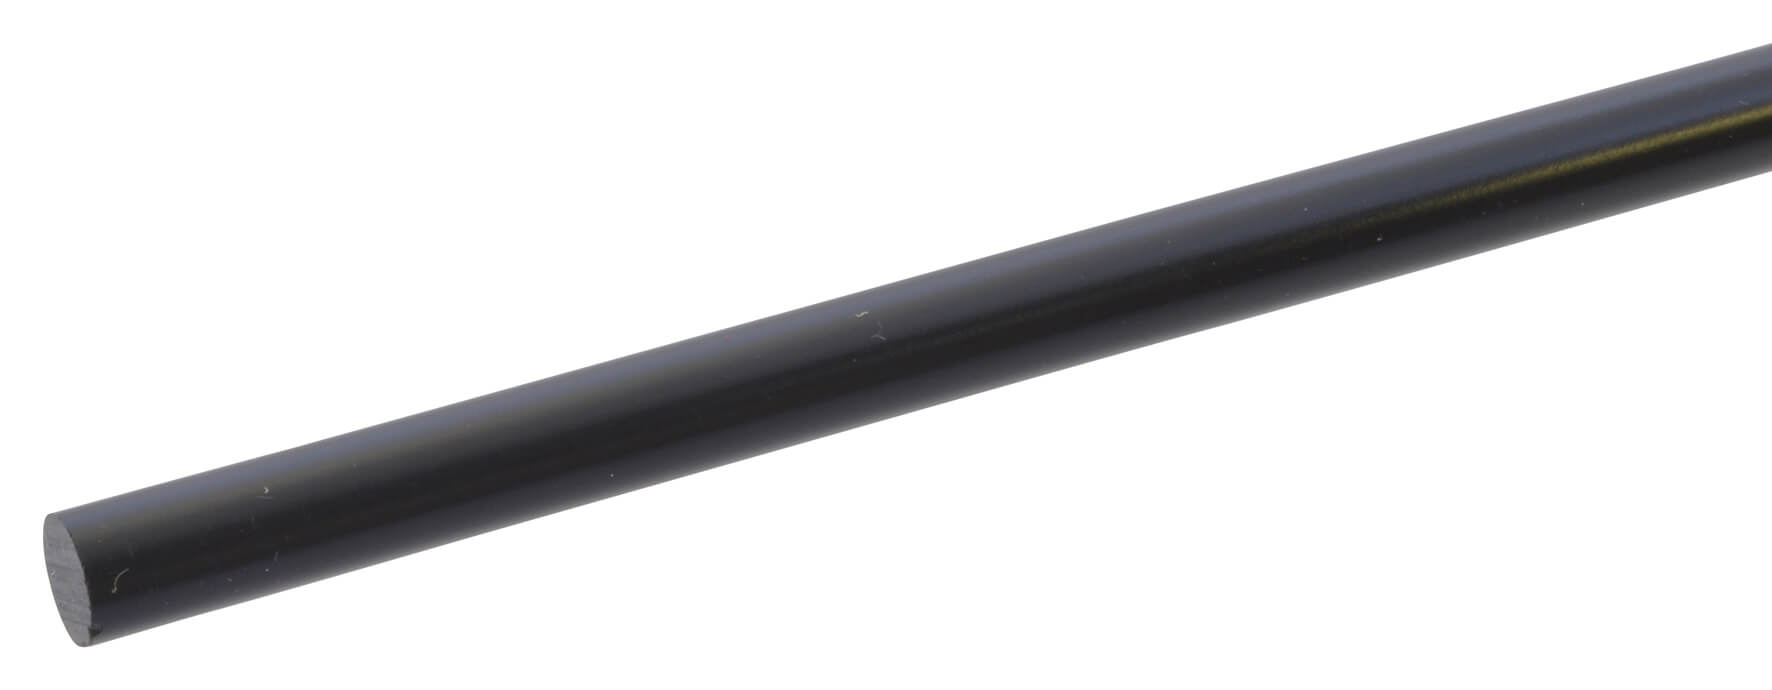 Acrylic Rod 4.8mm x 610mm - Solid Black